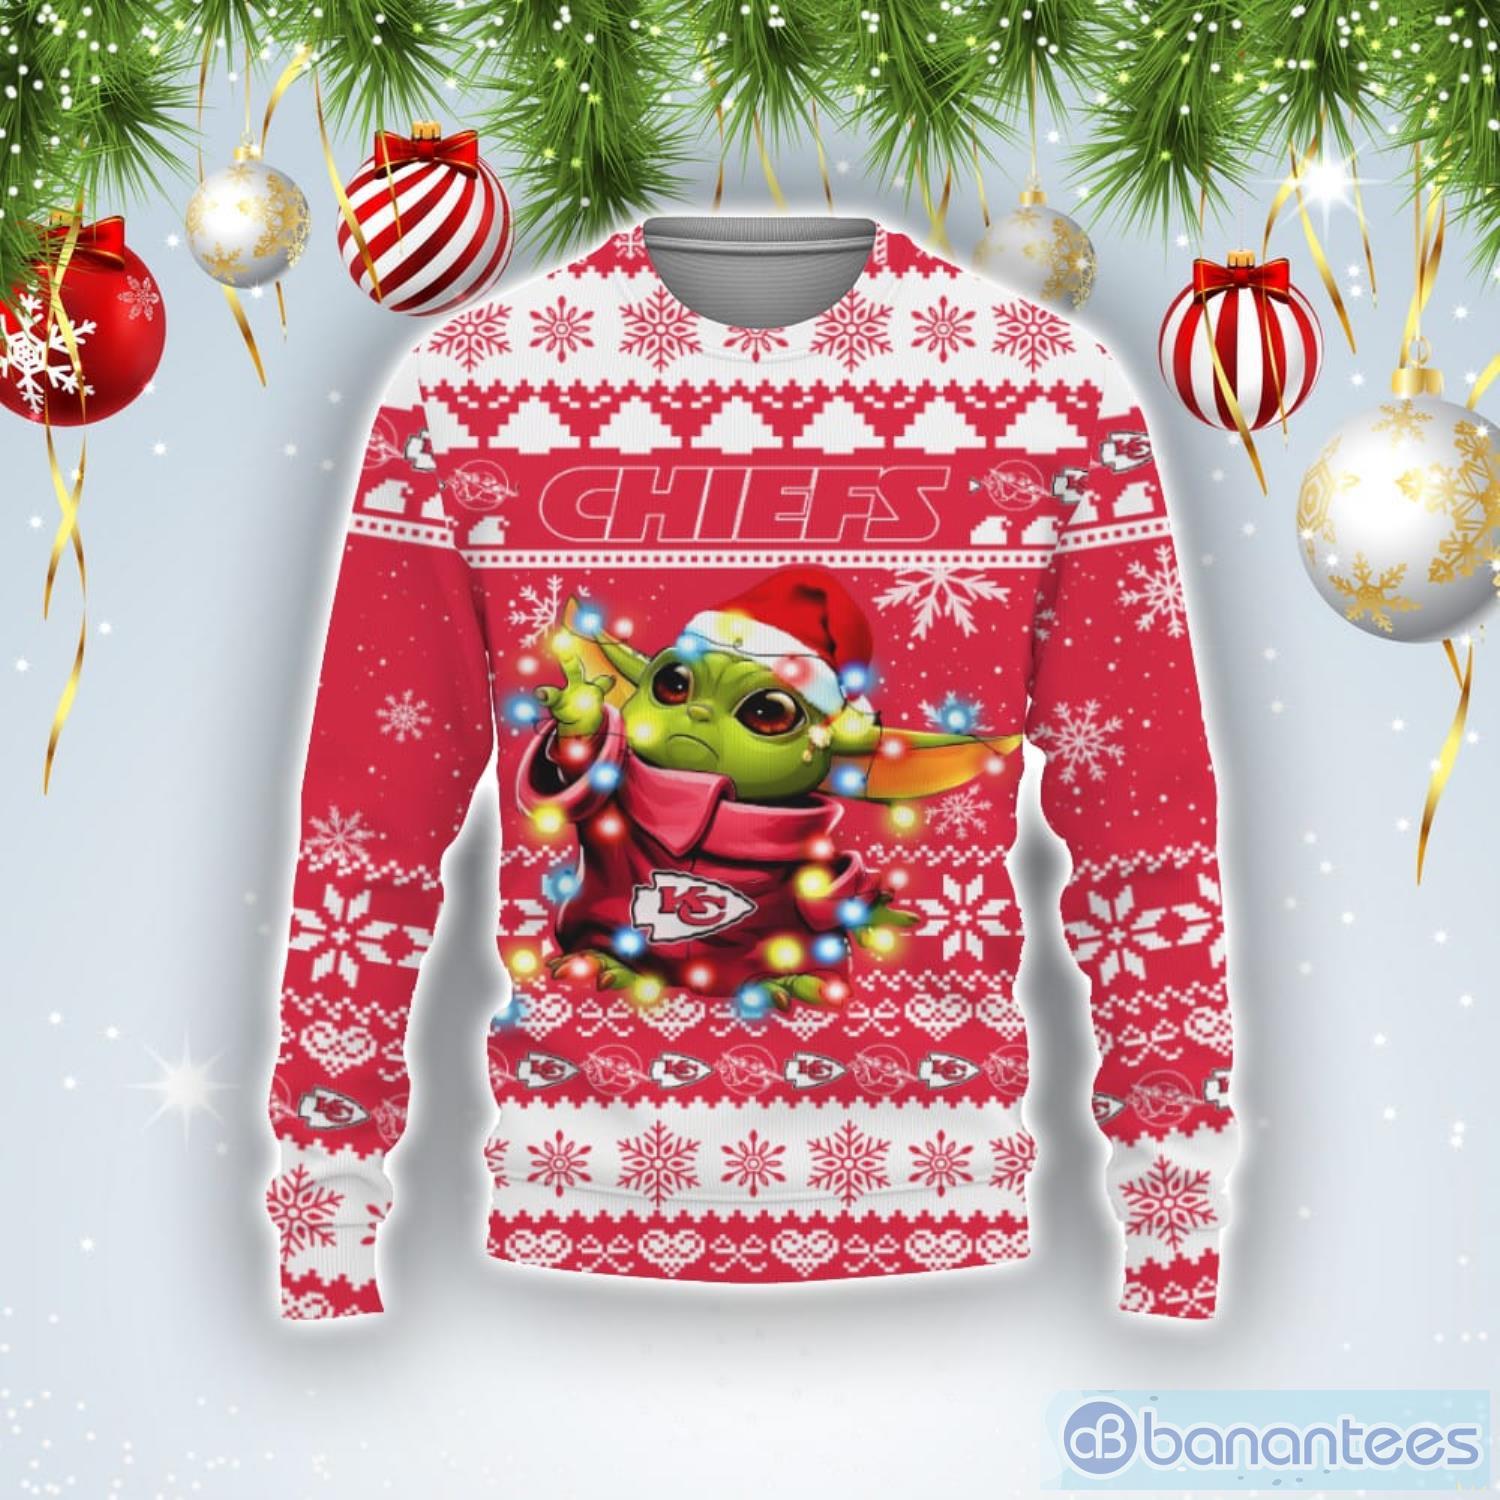 Kansas City Chiefs Baby Yoda Star Wars Sports Football American Ugly Christmas Sweater Product Photo 1